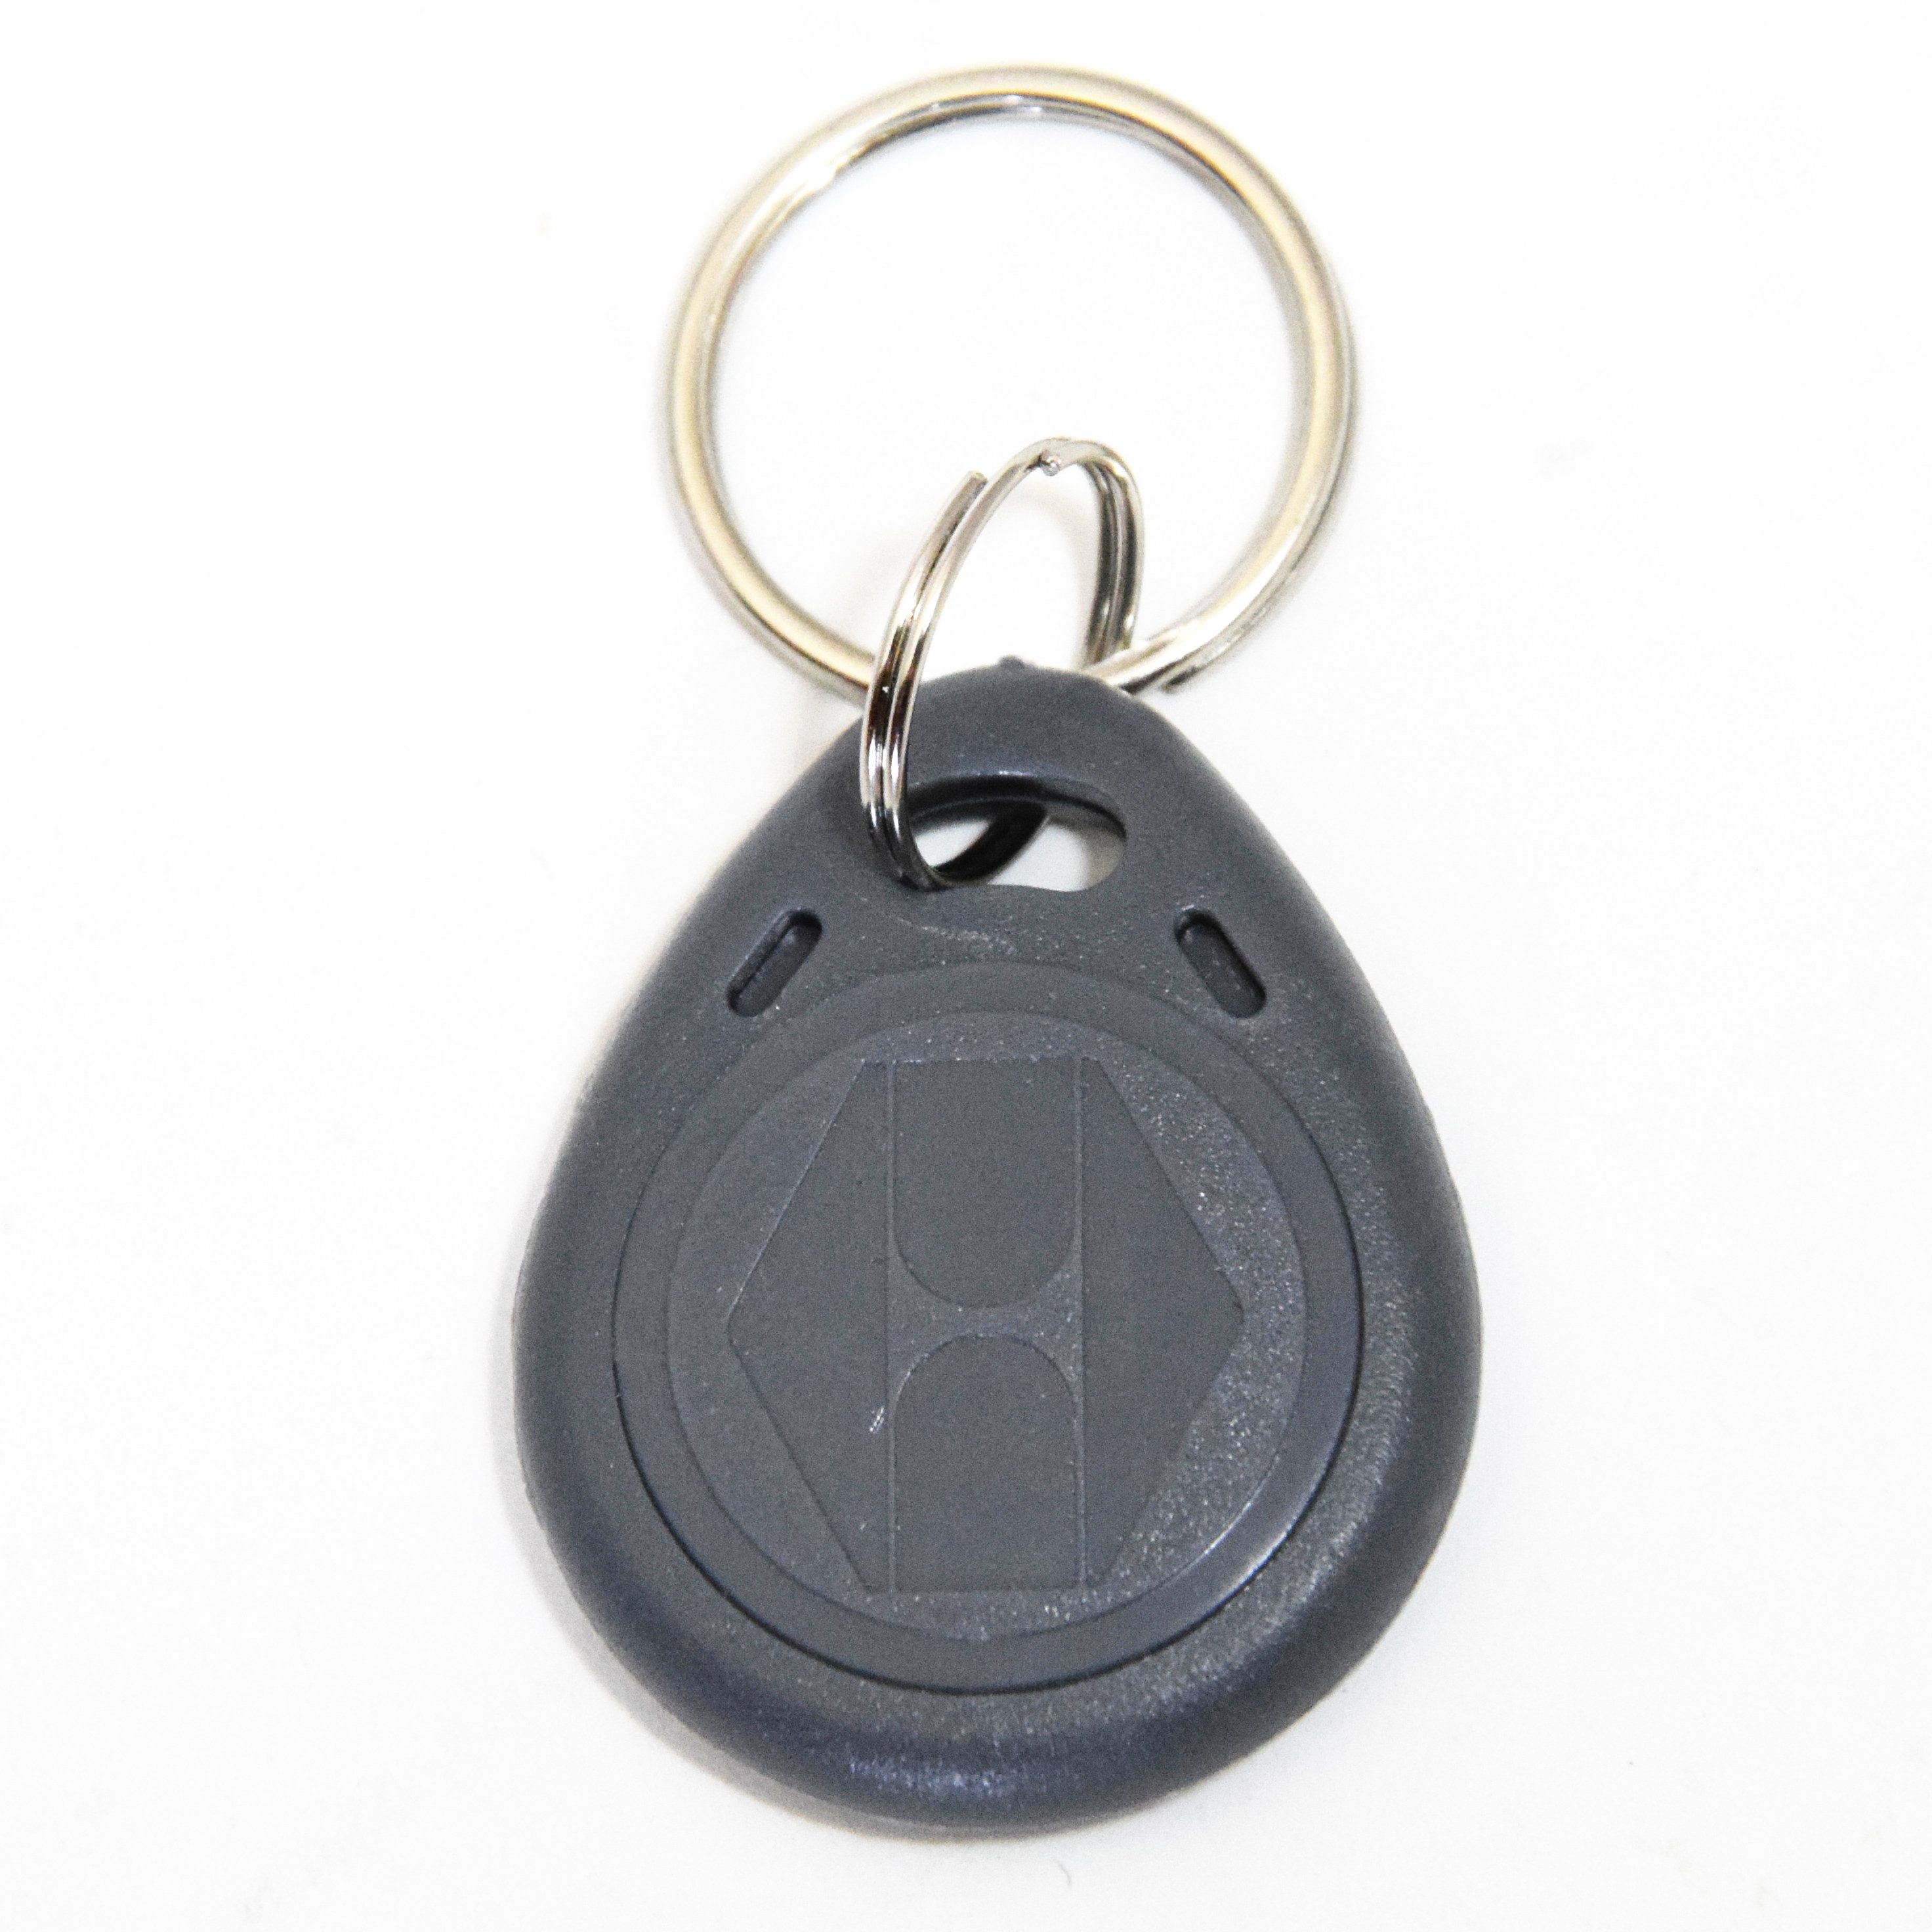 Электронный ключ для домофона. Брелок Atis RFID Keyfob em. Брелок RFID t5577 перезаписываемый. Брелок RFID t5577 (перезаписываемый) серый. Proximity-ключи em-Marin.